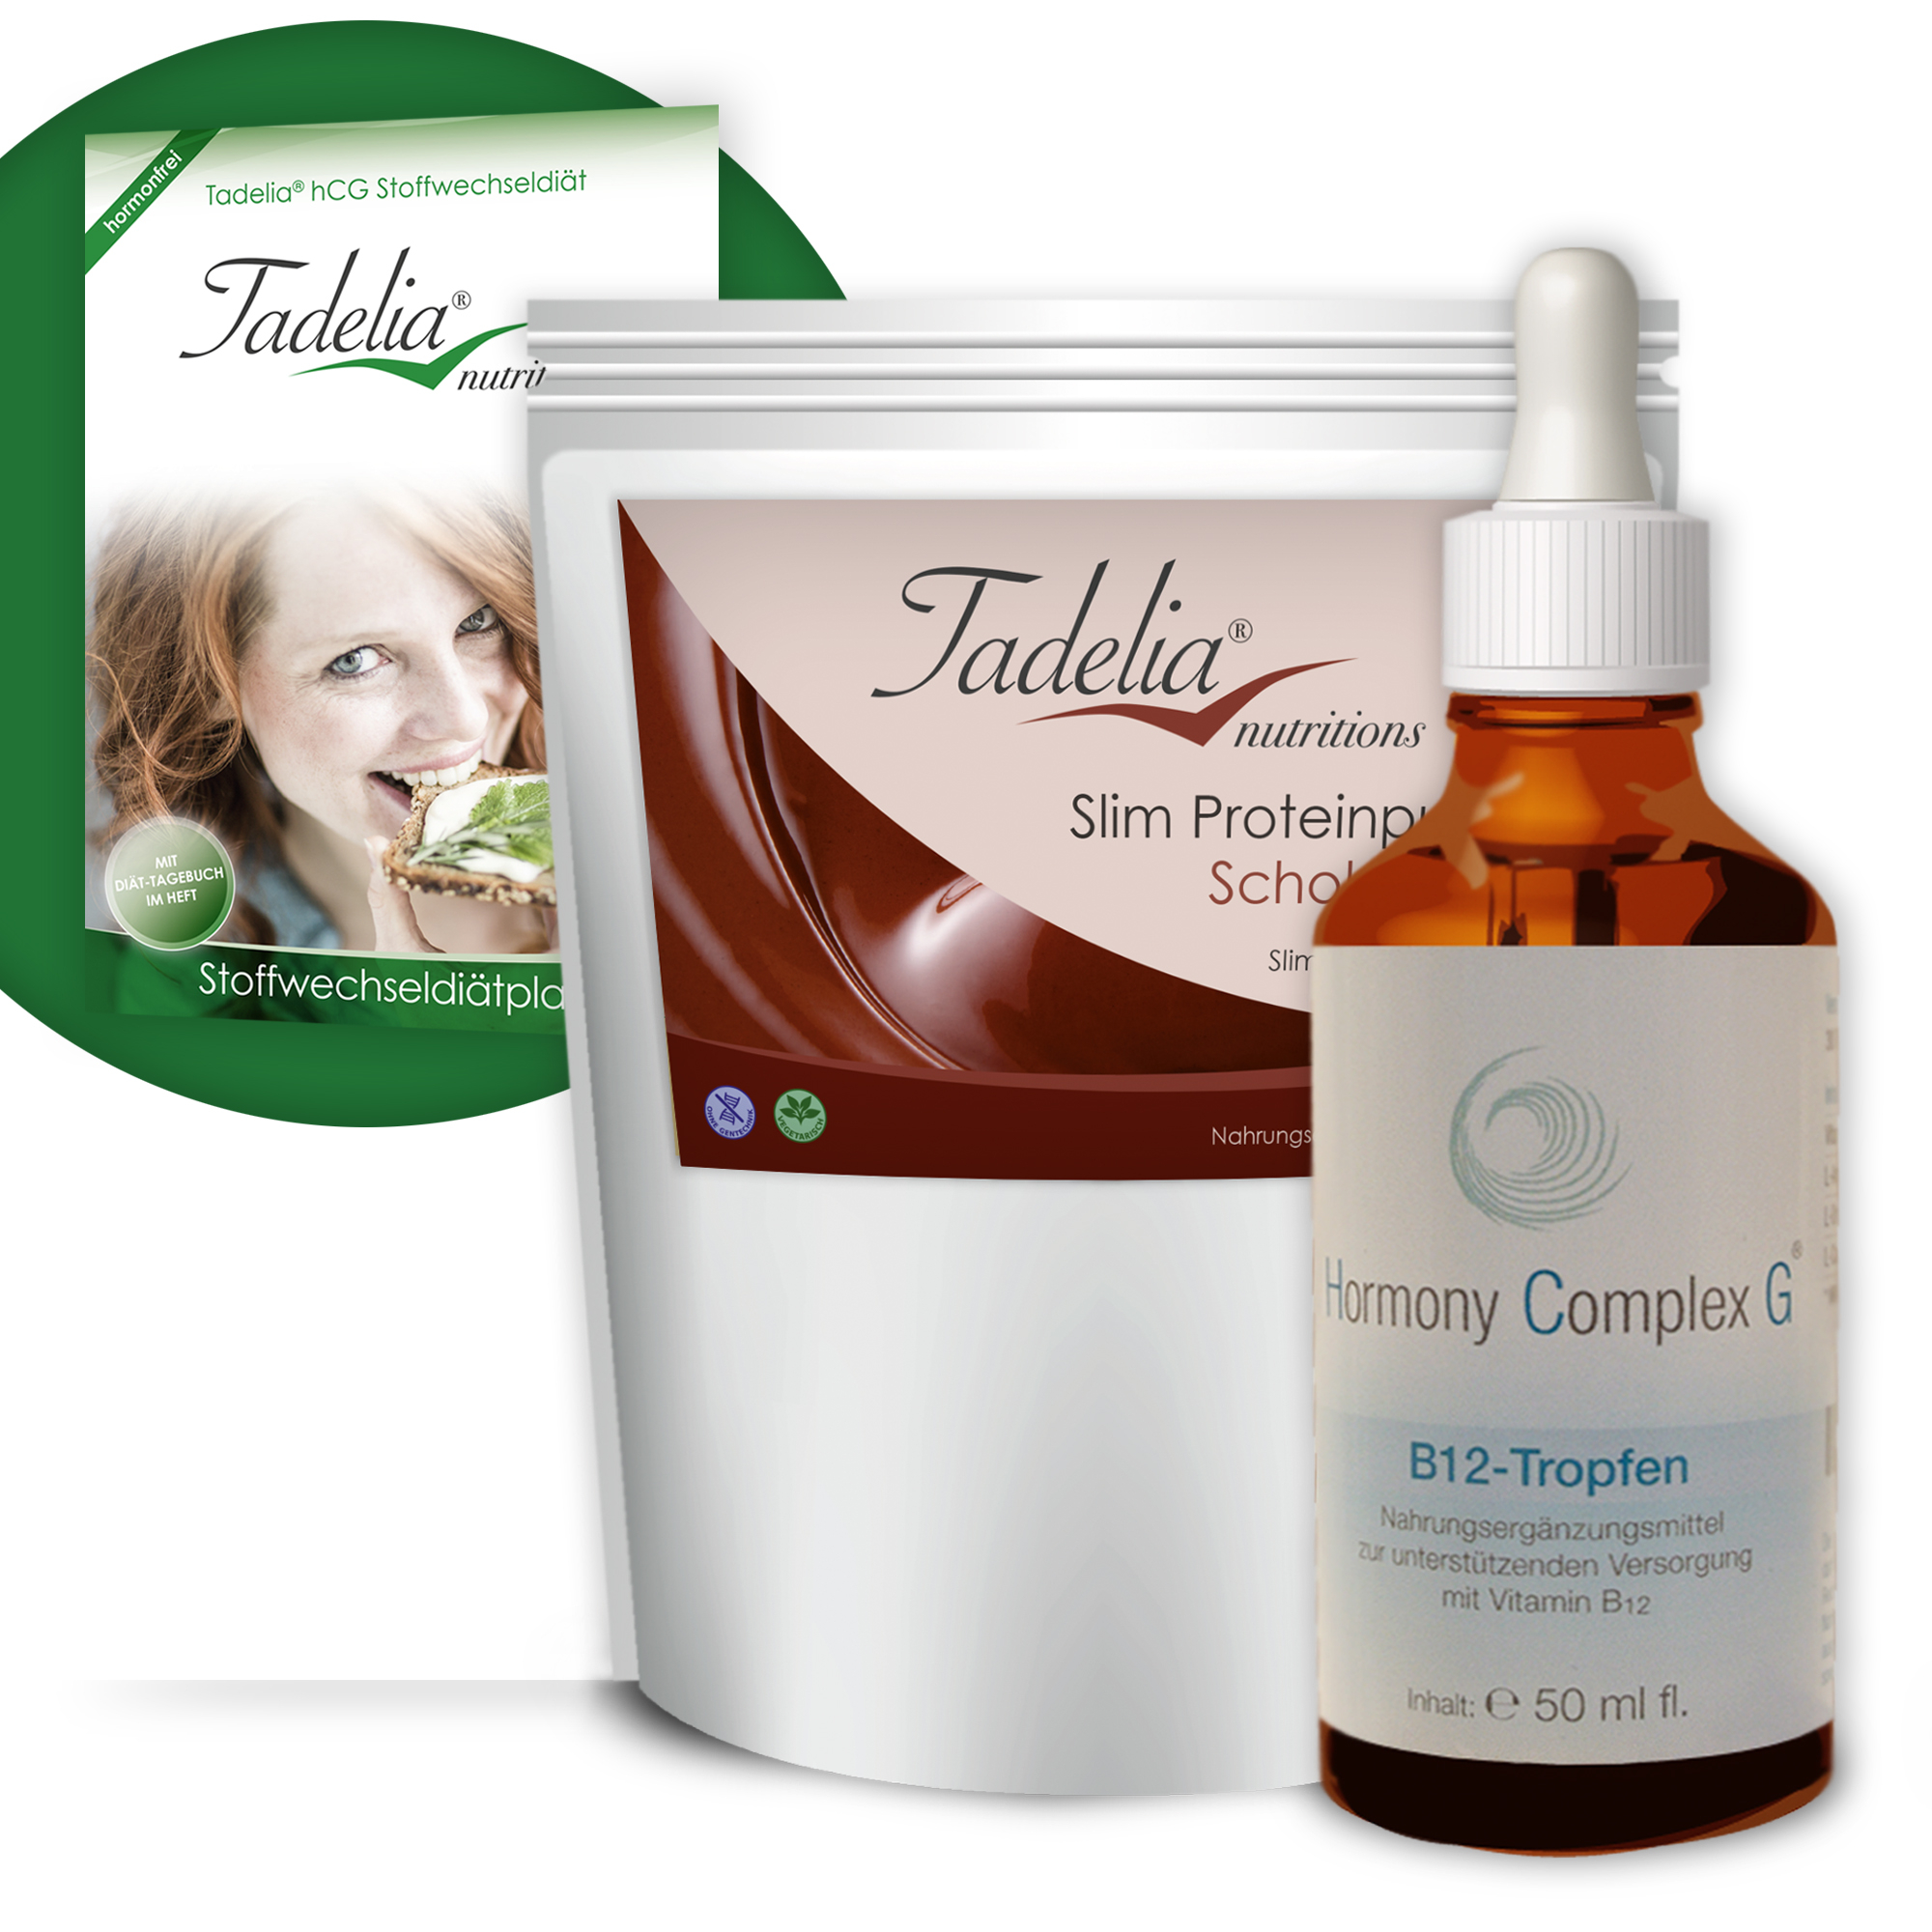 Tadelia® Slim Proteinpulver Schoko mit Tadelia hCG Stoffwechseldiätplan + Hormony Complex G B12 Tropfen